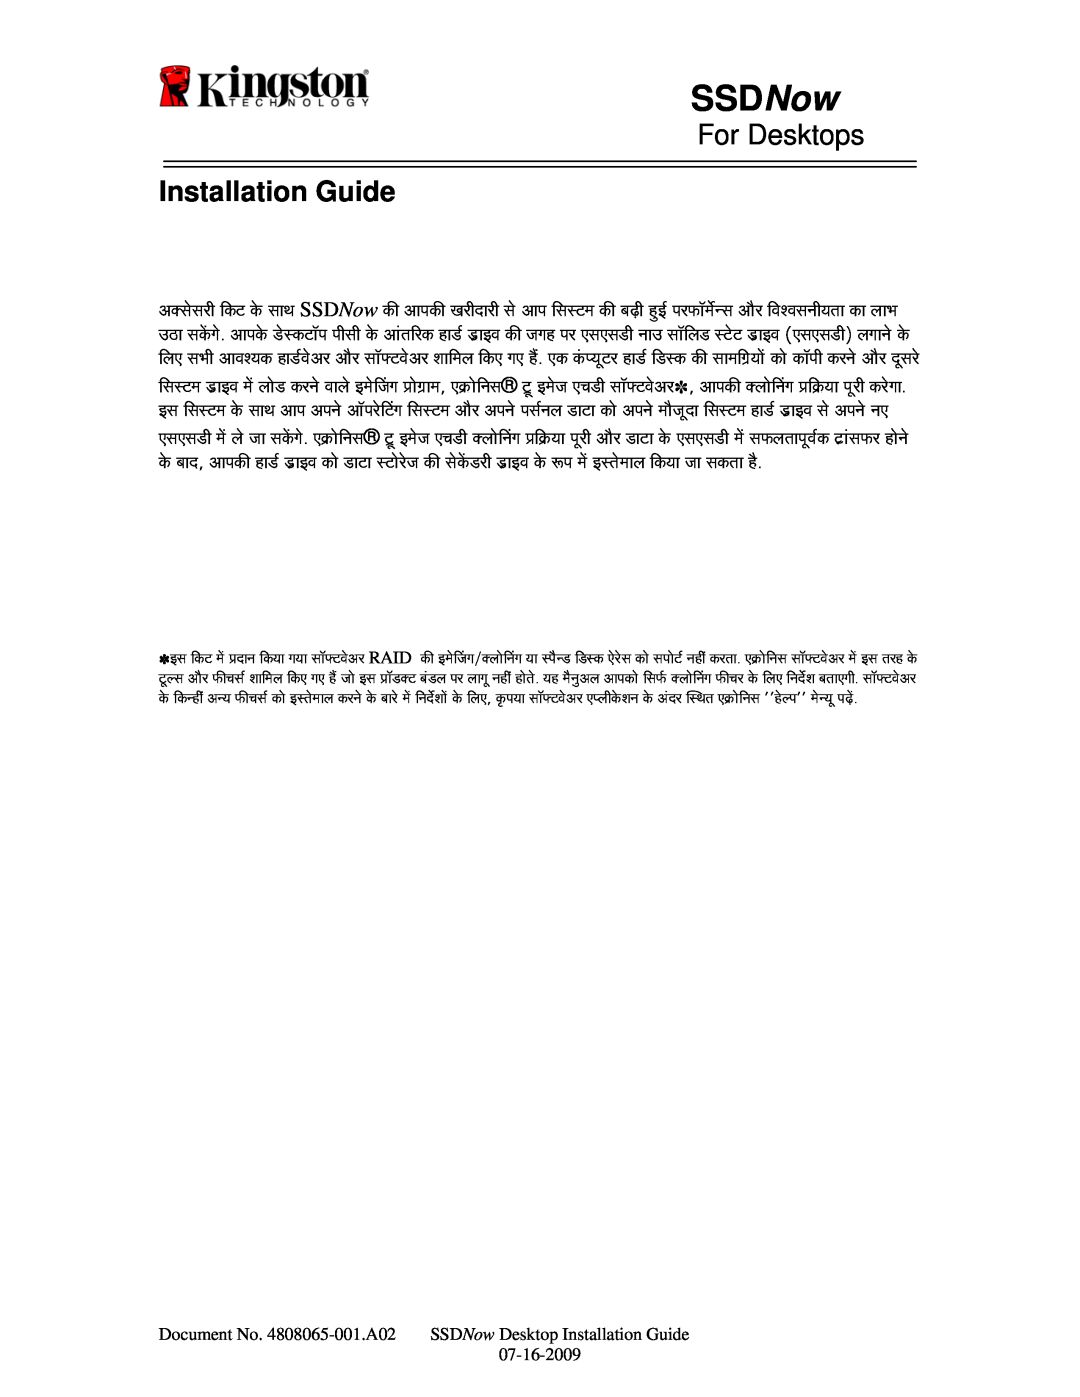 Kingston Technology 07-16-2009 manual SSDNow, For Desktops, Installation Guide 